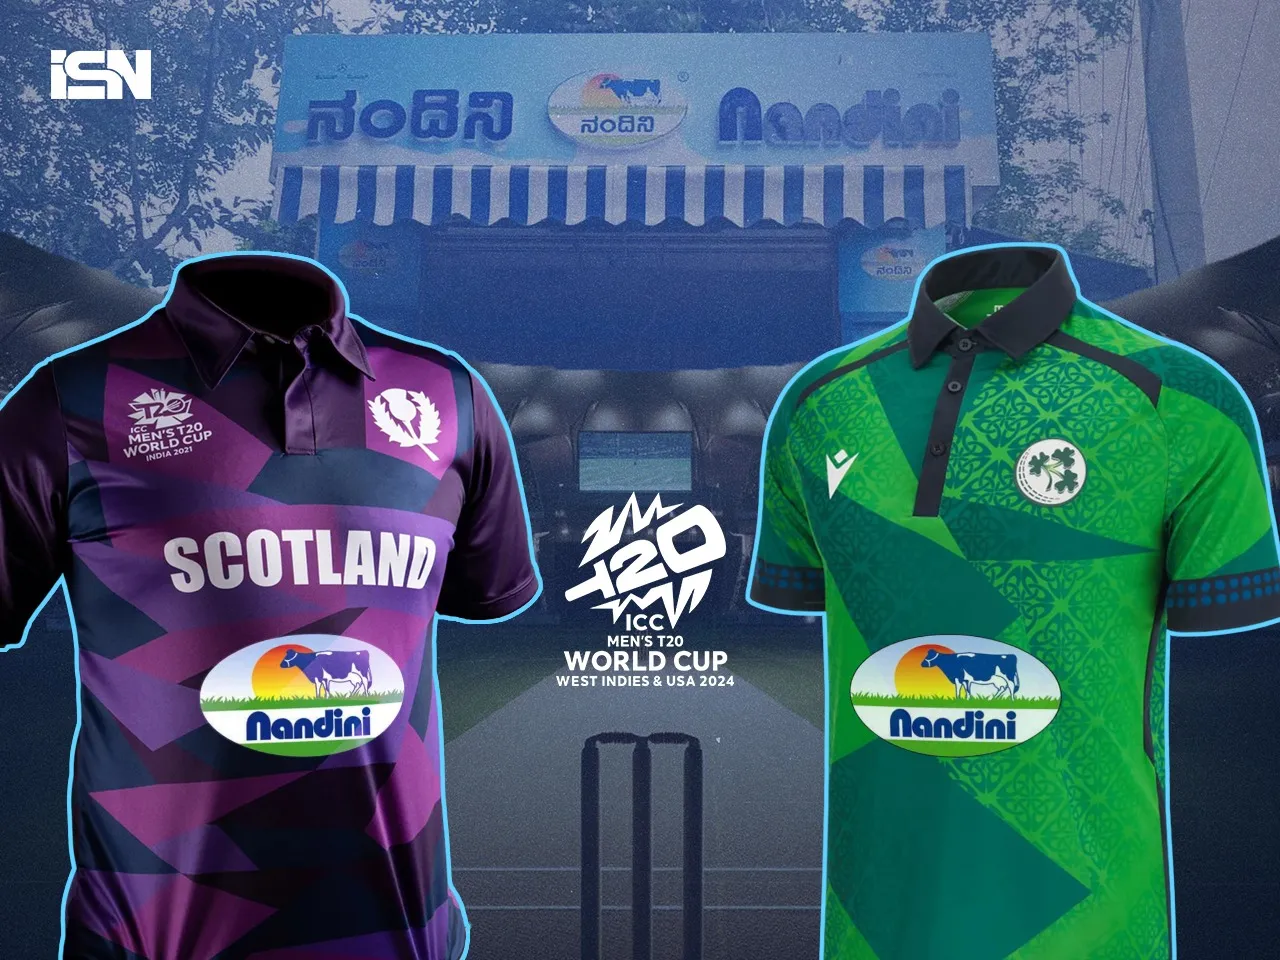 Karnataka's Nandini Dairy to sponsor Ireland and Scotland teams in upcoming T20 World Cup